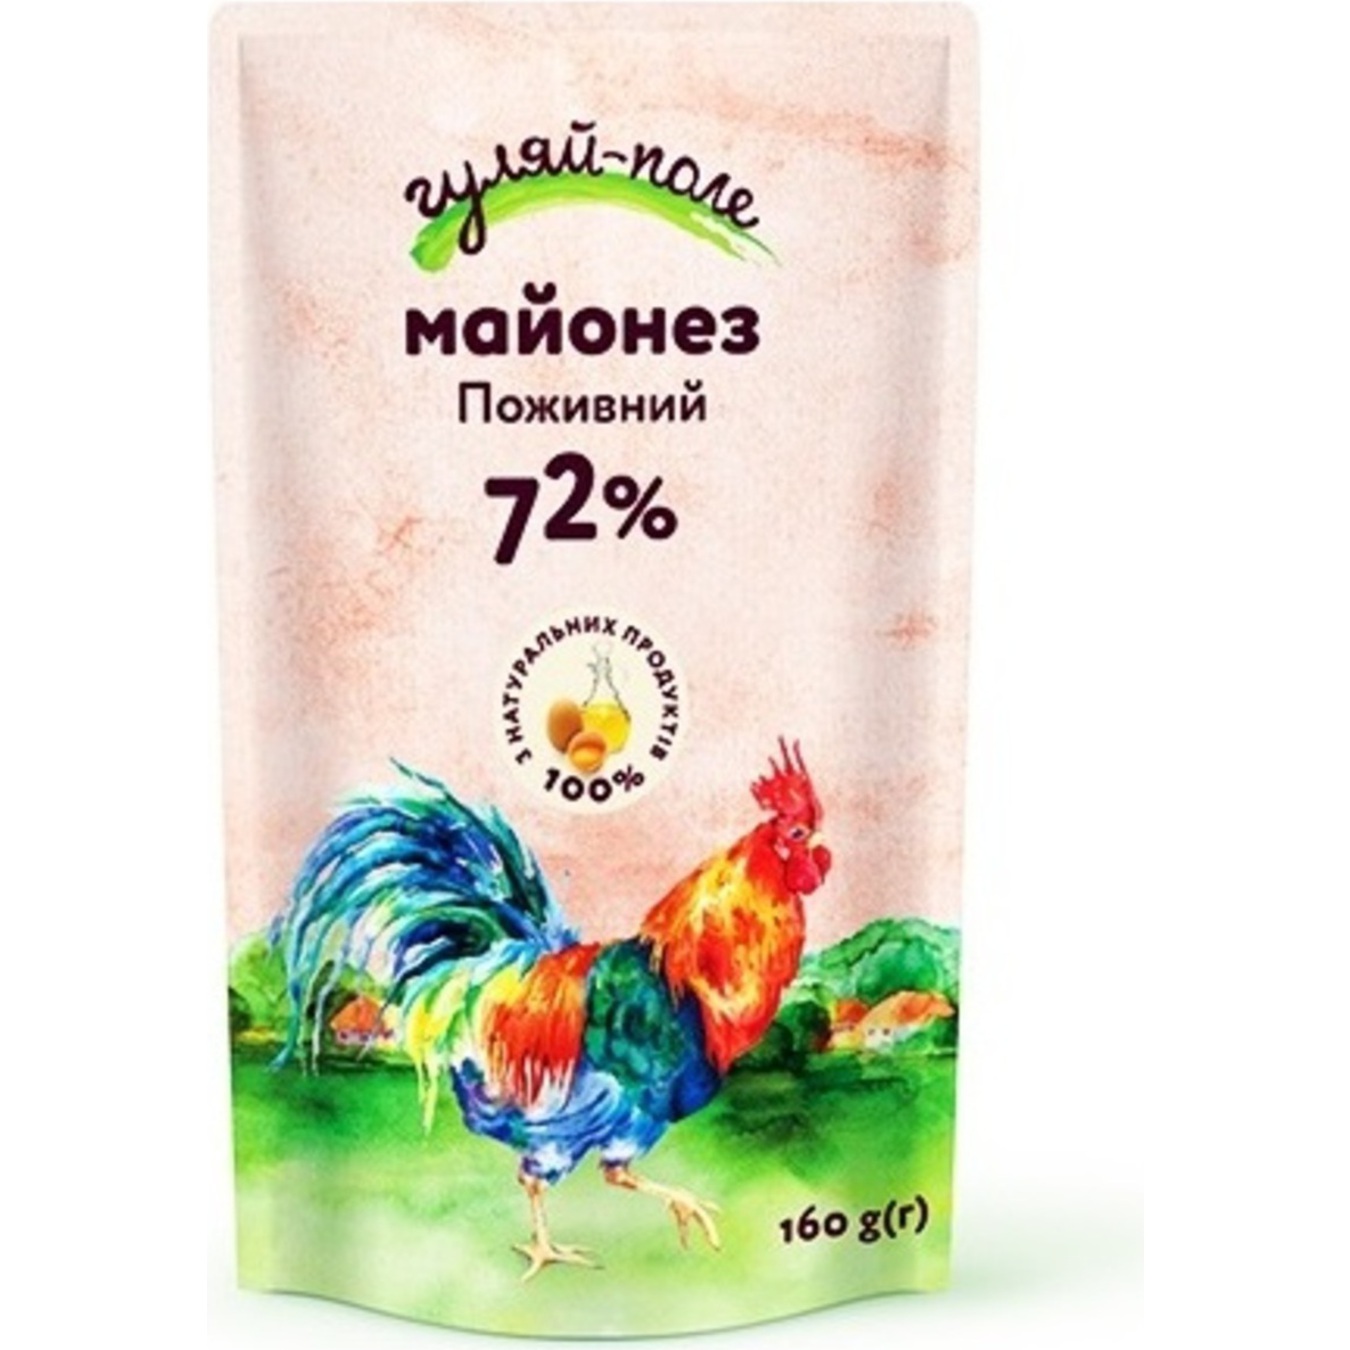 Gulyay-Pole Nutritional Mayonnaise 72% 160g